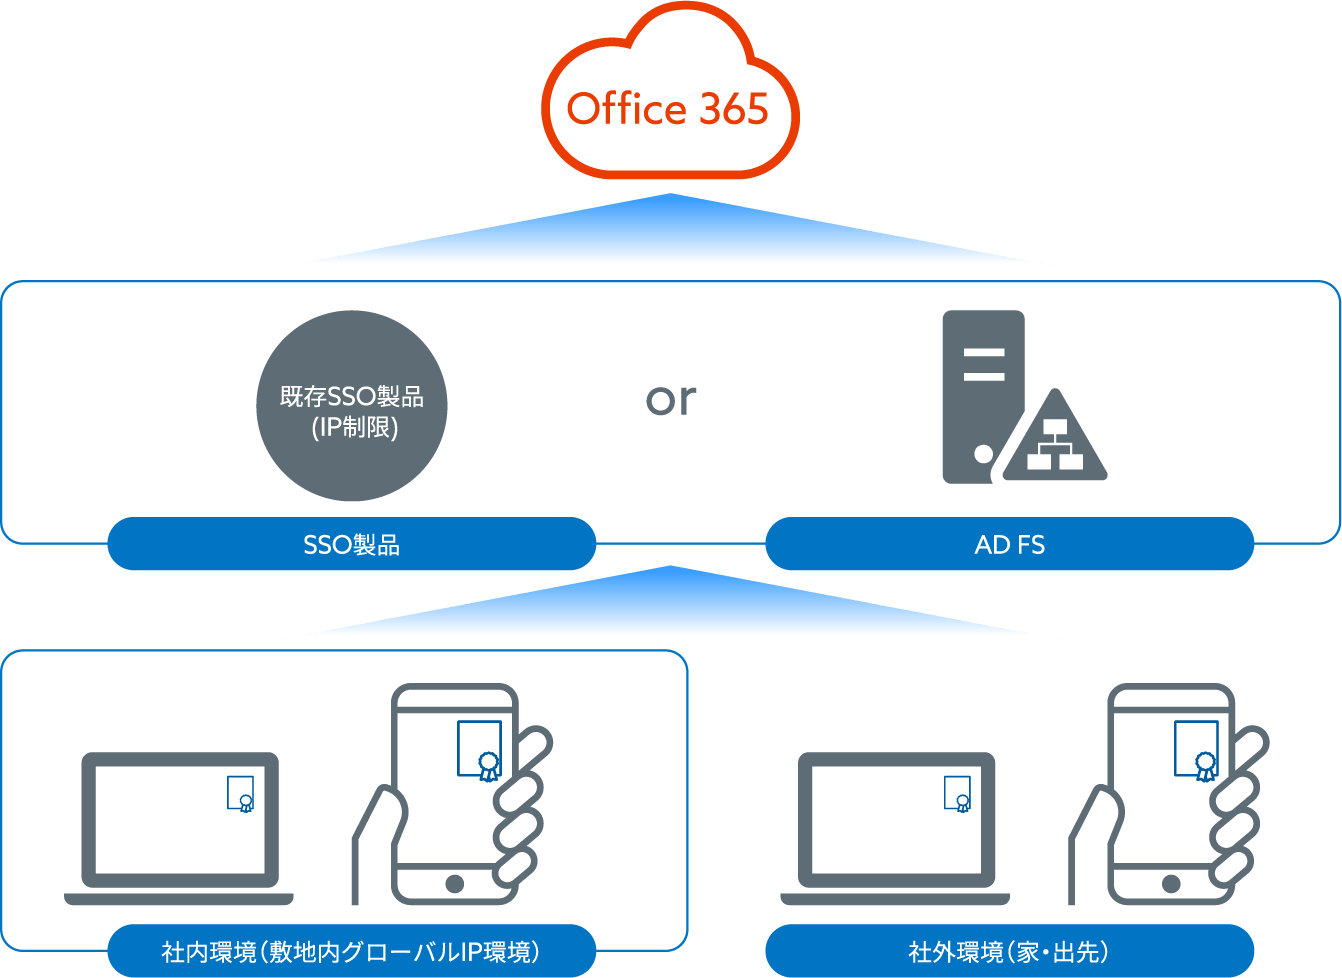 Office 365 既存SSO製品(IP制限) SSO製品 or AD FS 社内環境（敷地内グローバルIP環境） 社外環境（家・出先）